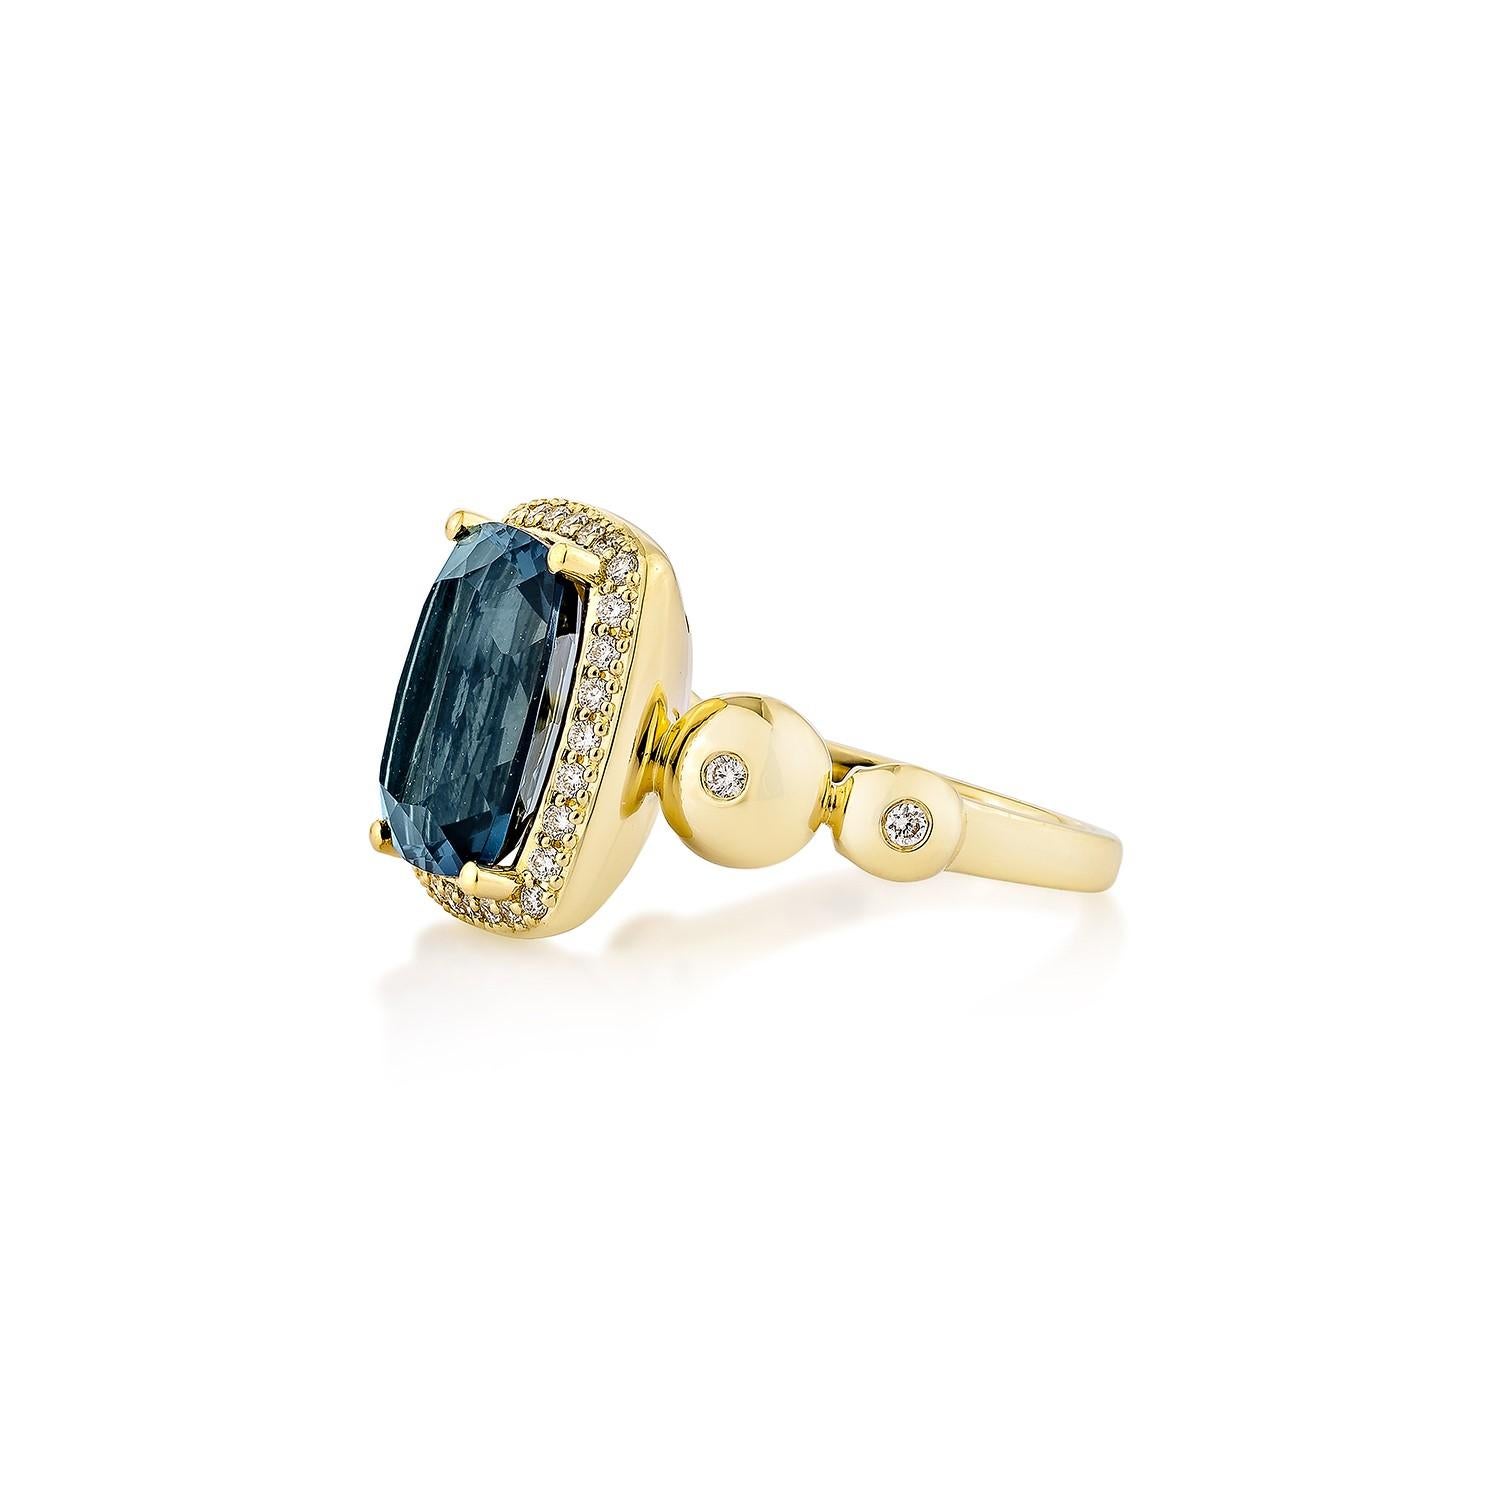 Cushion Cut 5.78 Carat London Blue Topaz Fancy Ring in 18Karat Yellow Gold with Diamond. For Sale